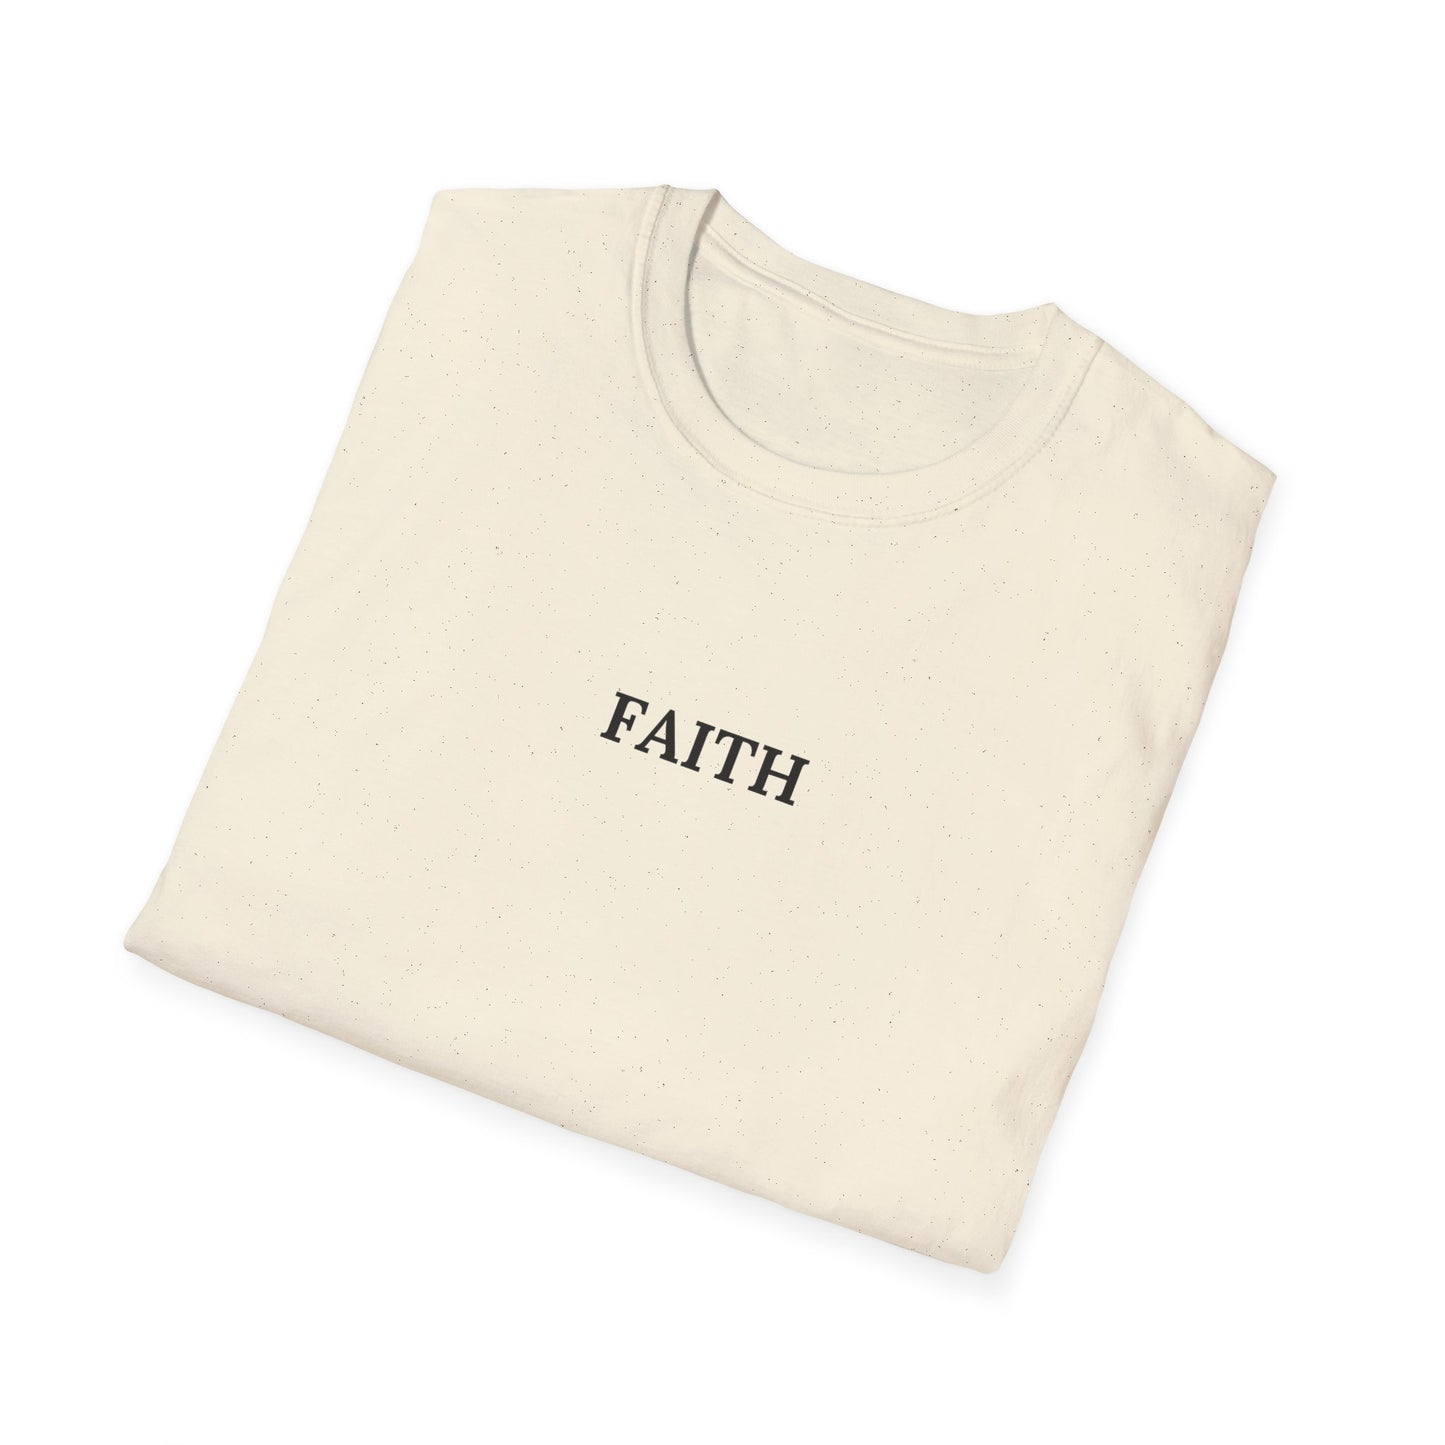 Have a Little Faith Women's Relaxed/Plus Tshirt (Black Logo)